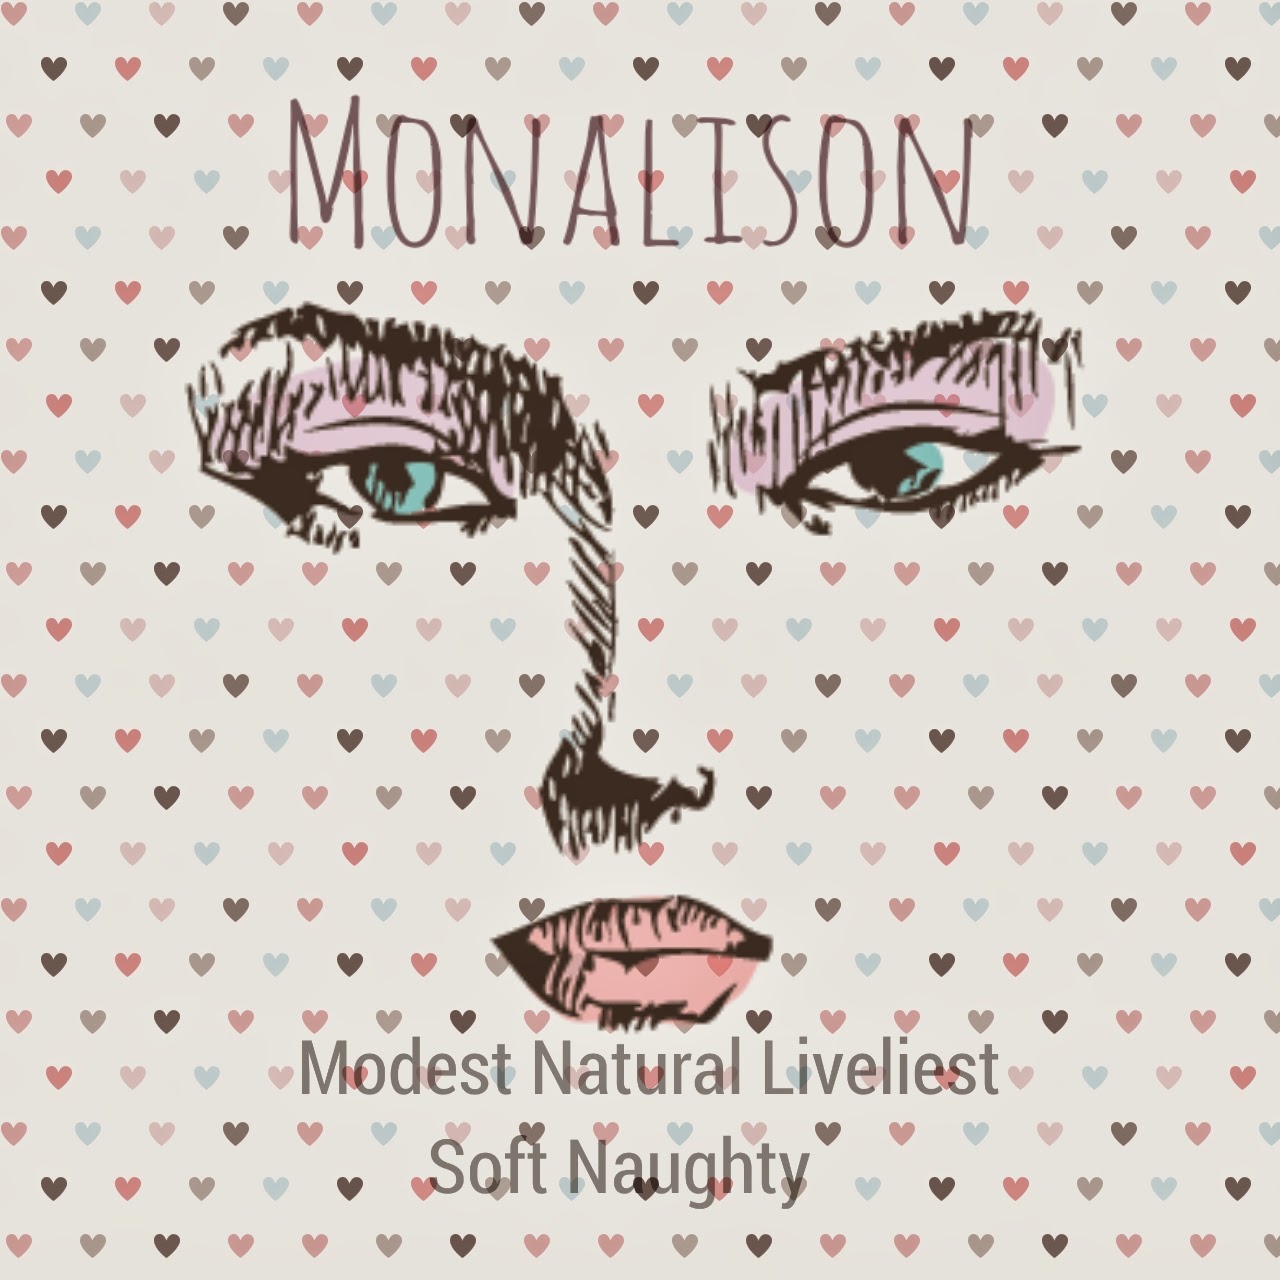 Monalison